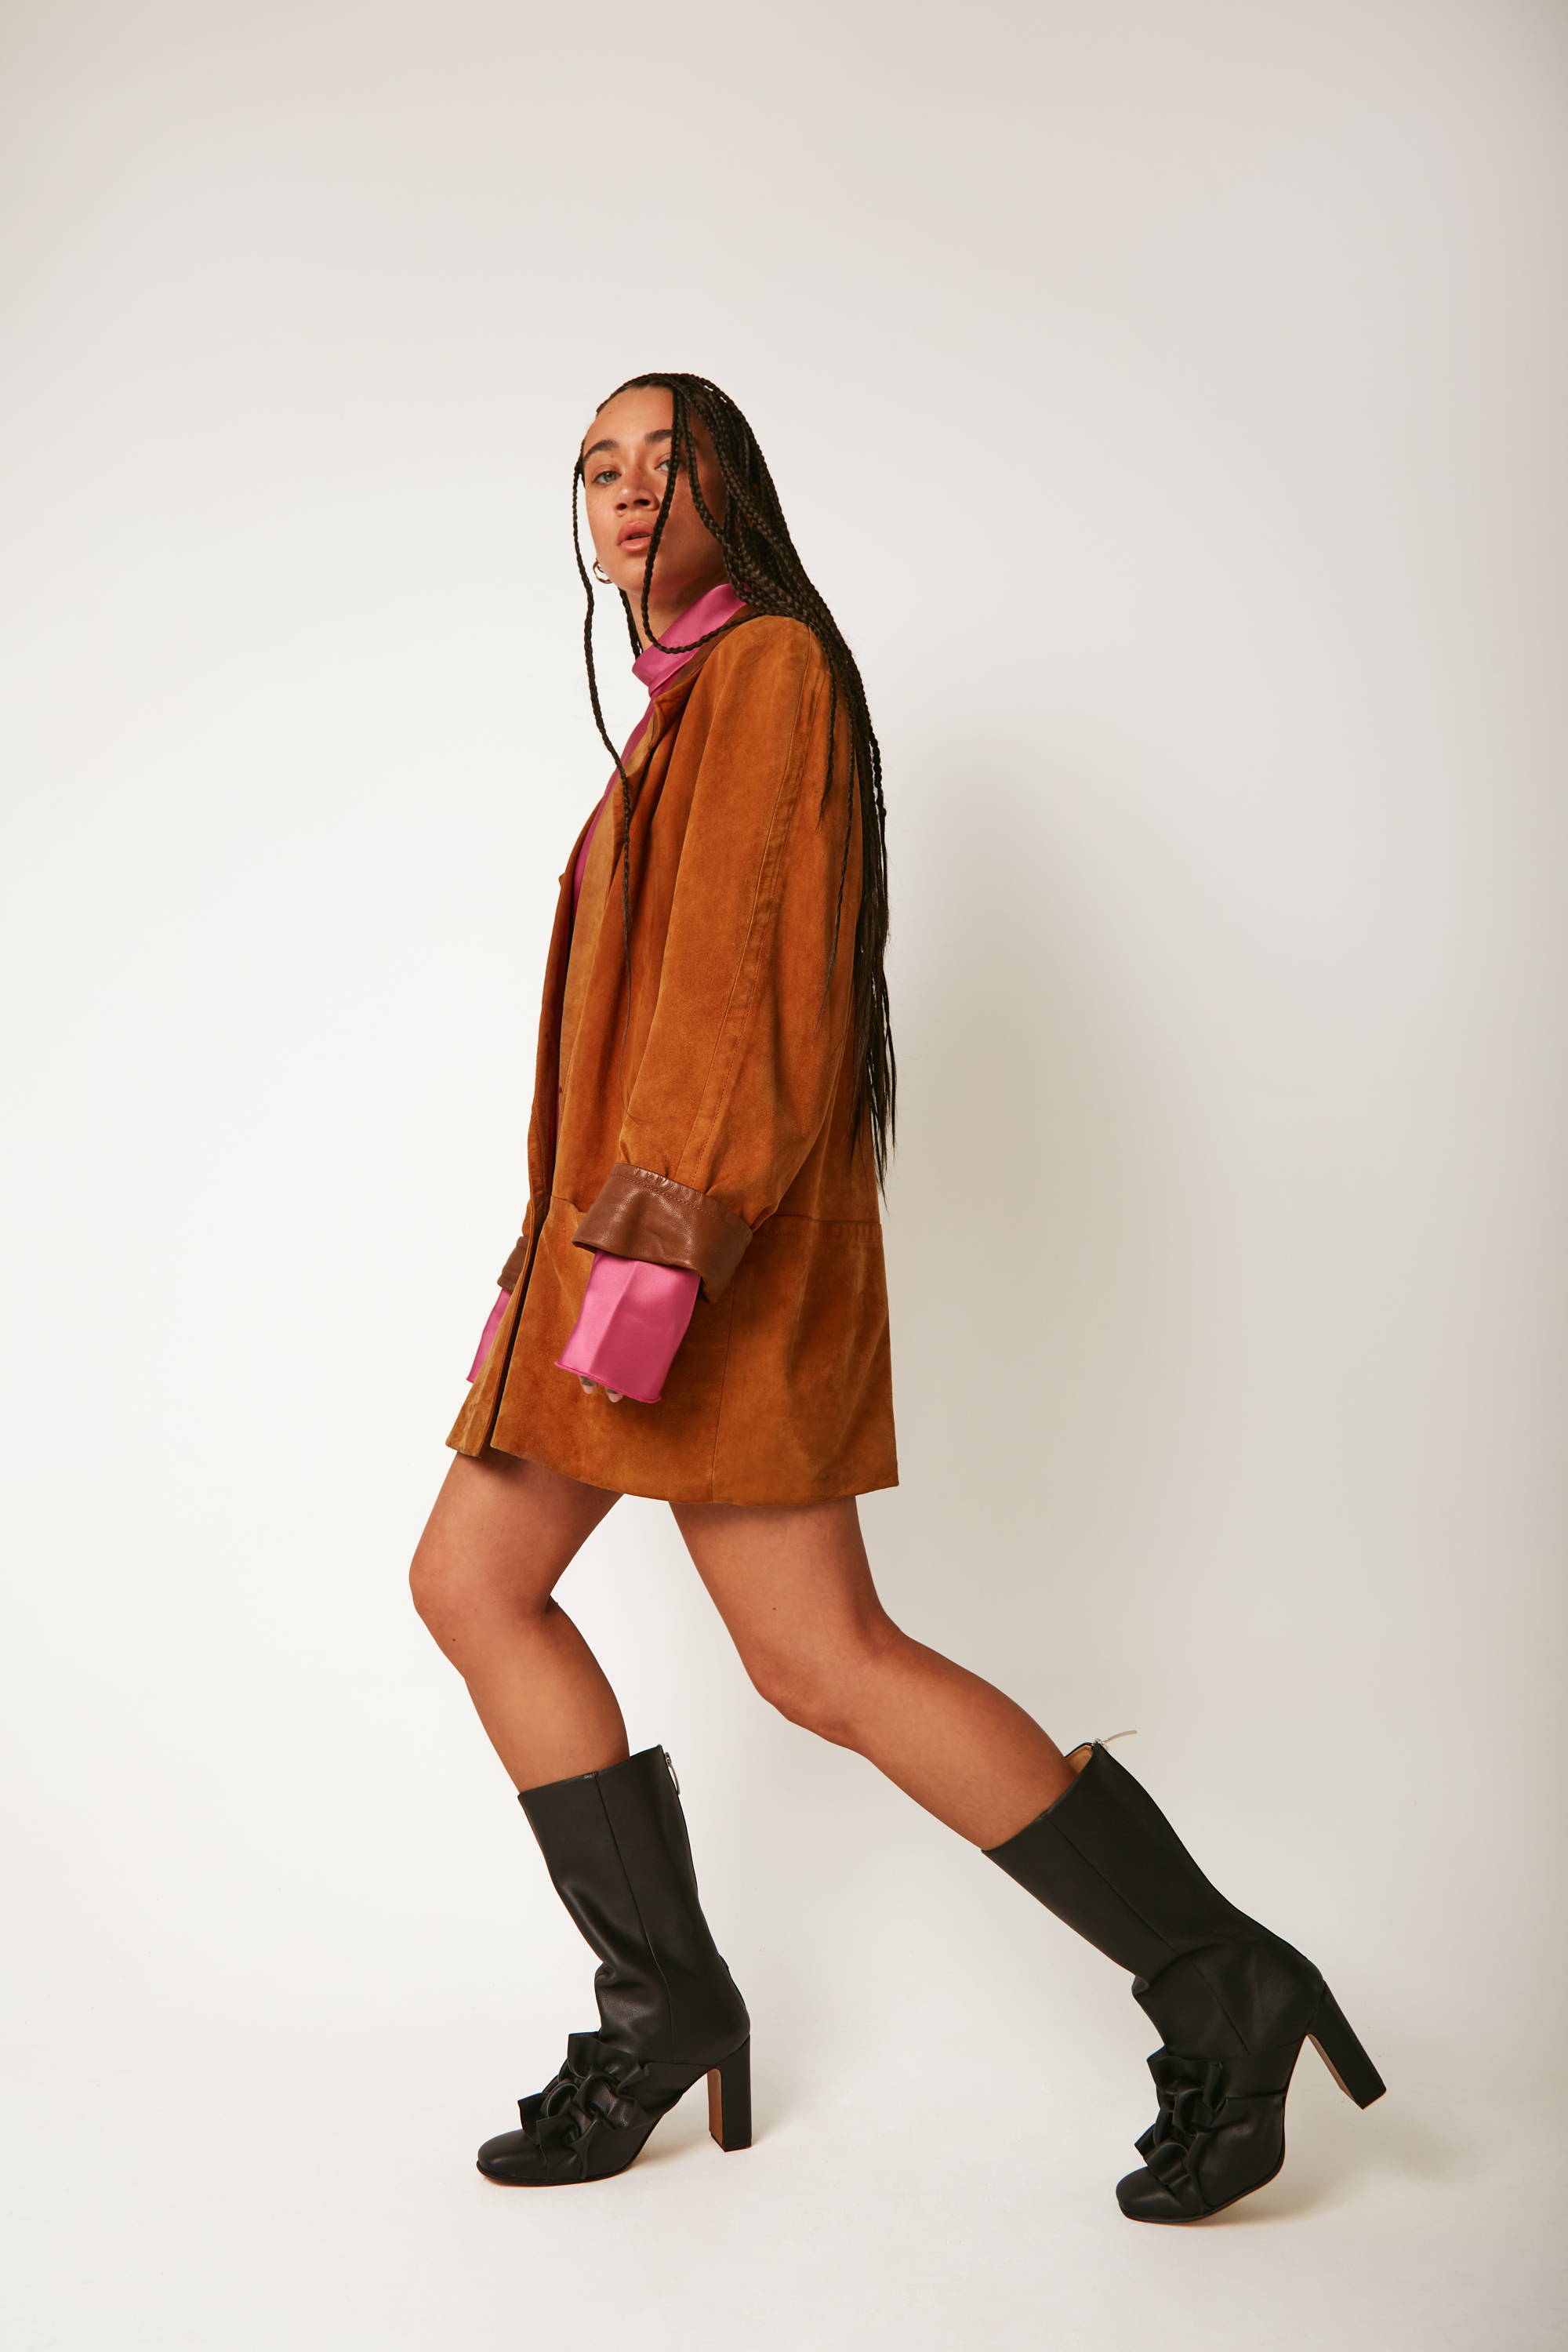 Vandrelaar black Greta high-heel vegan ankle boot on model wearing a brown suede coat